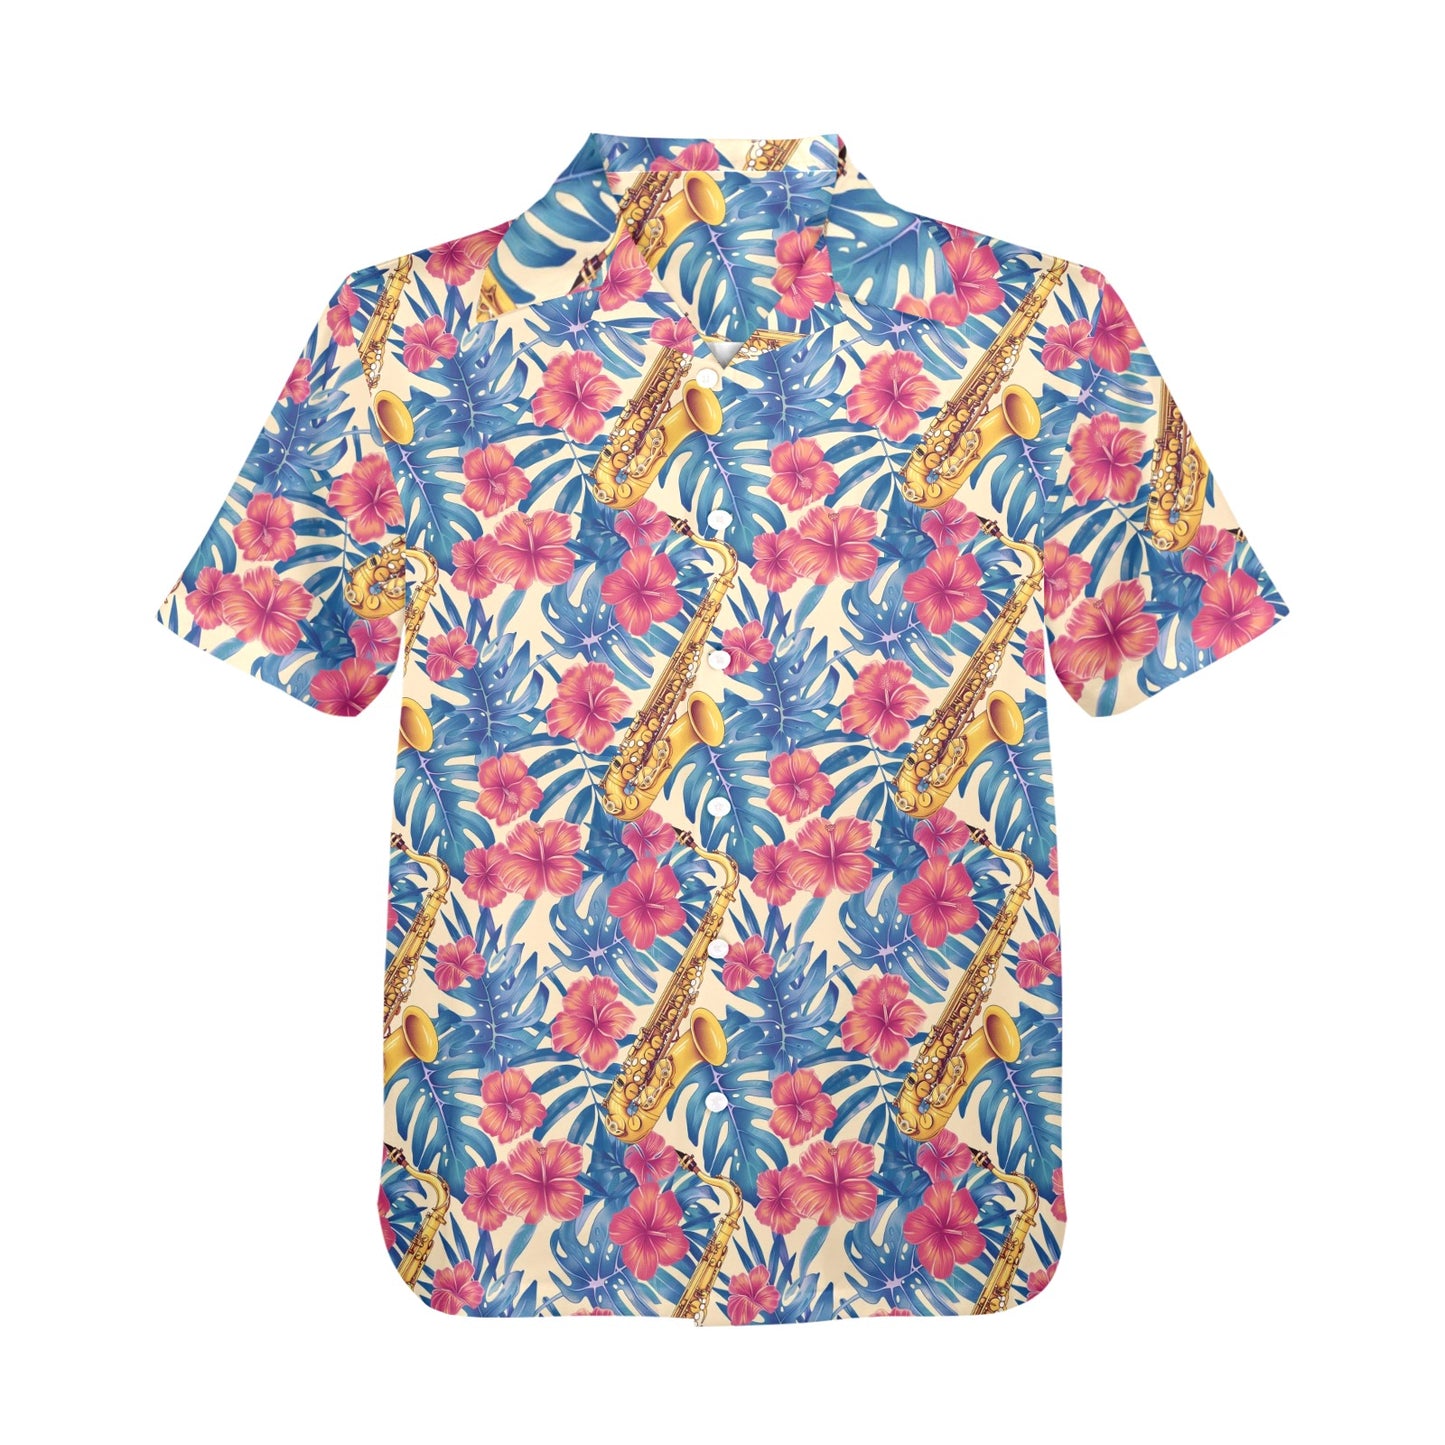 Saxophone Men Hawaiian shirt, Music Jazz Floral Flowers Beach Red Blue Vintage Aloha Hawaii Retro Tropical Plus Size Pocket Guys Button Down